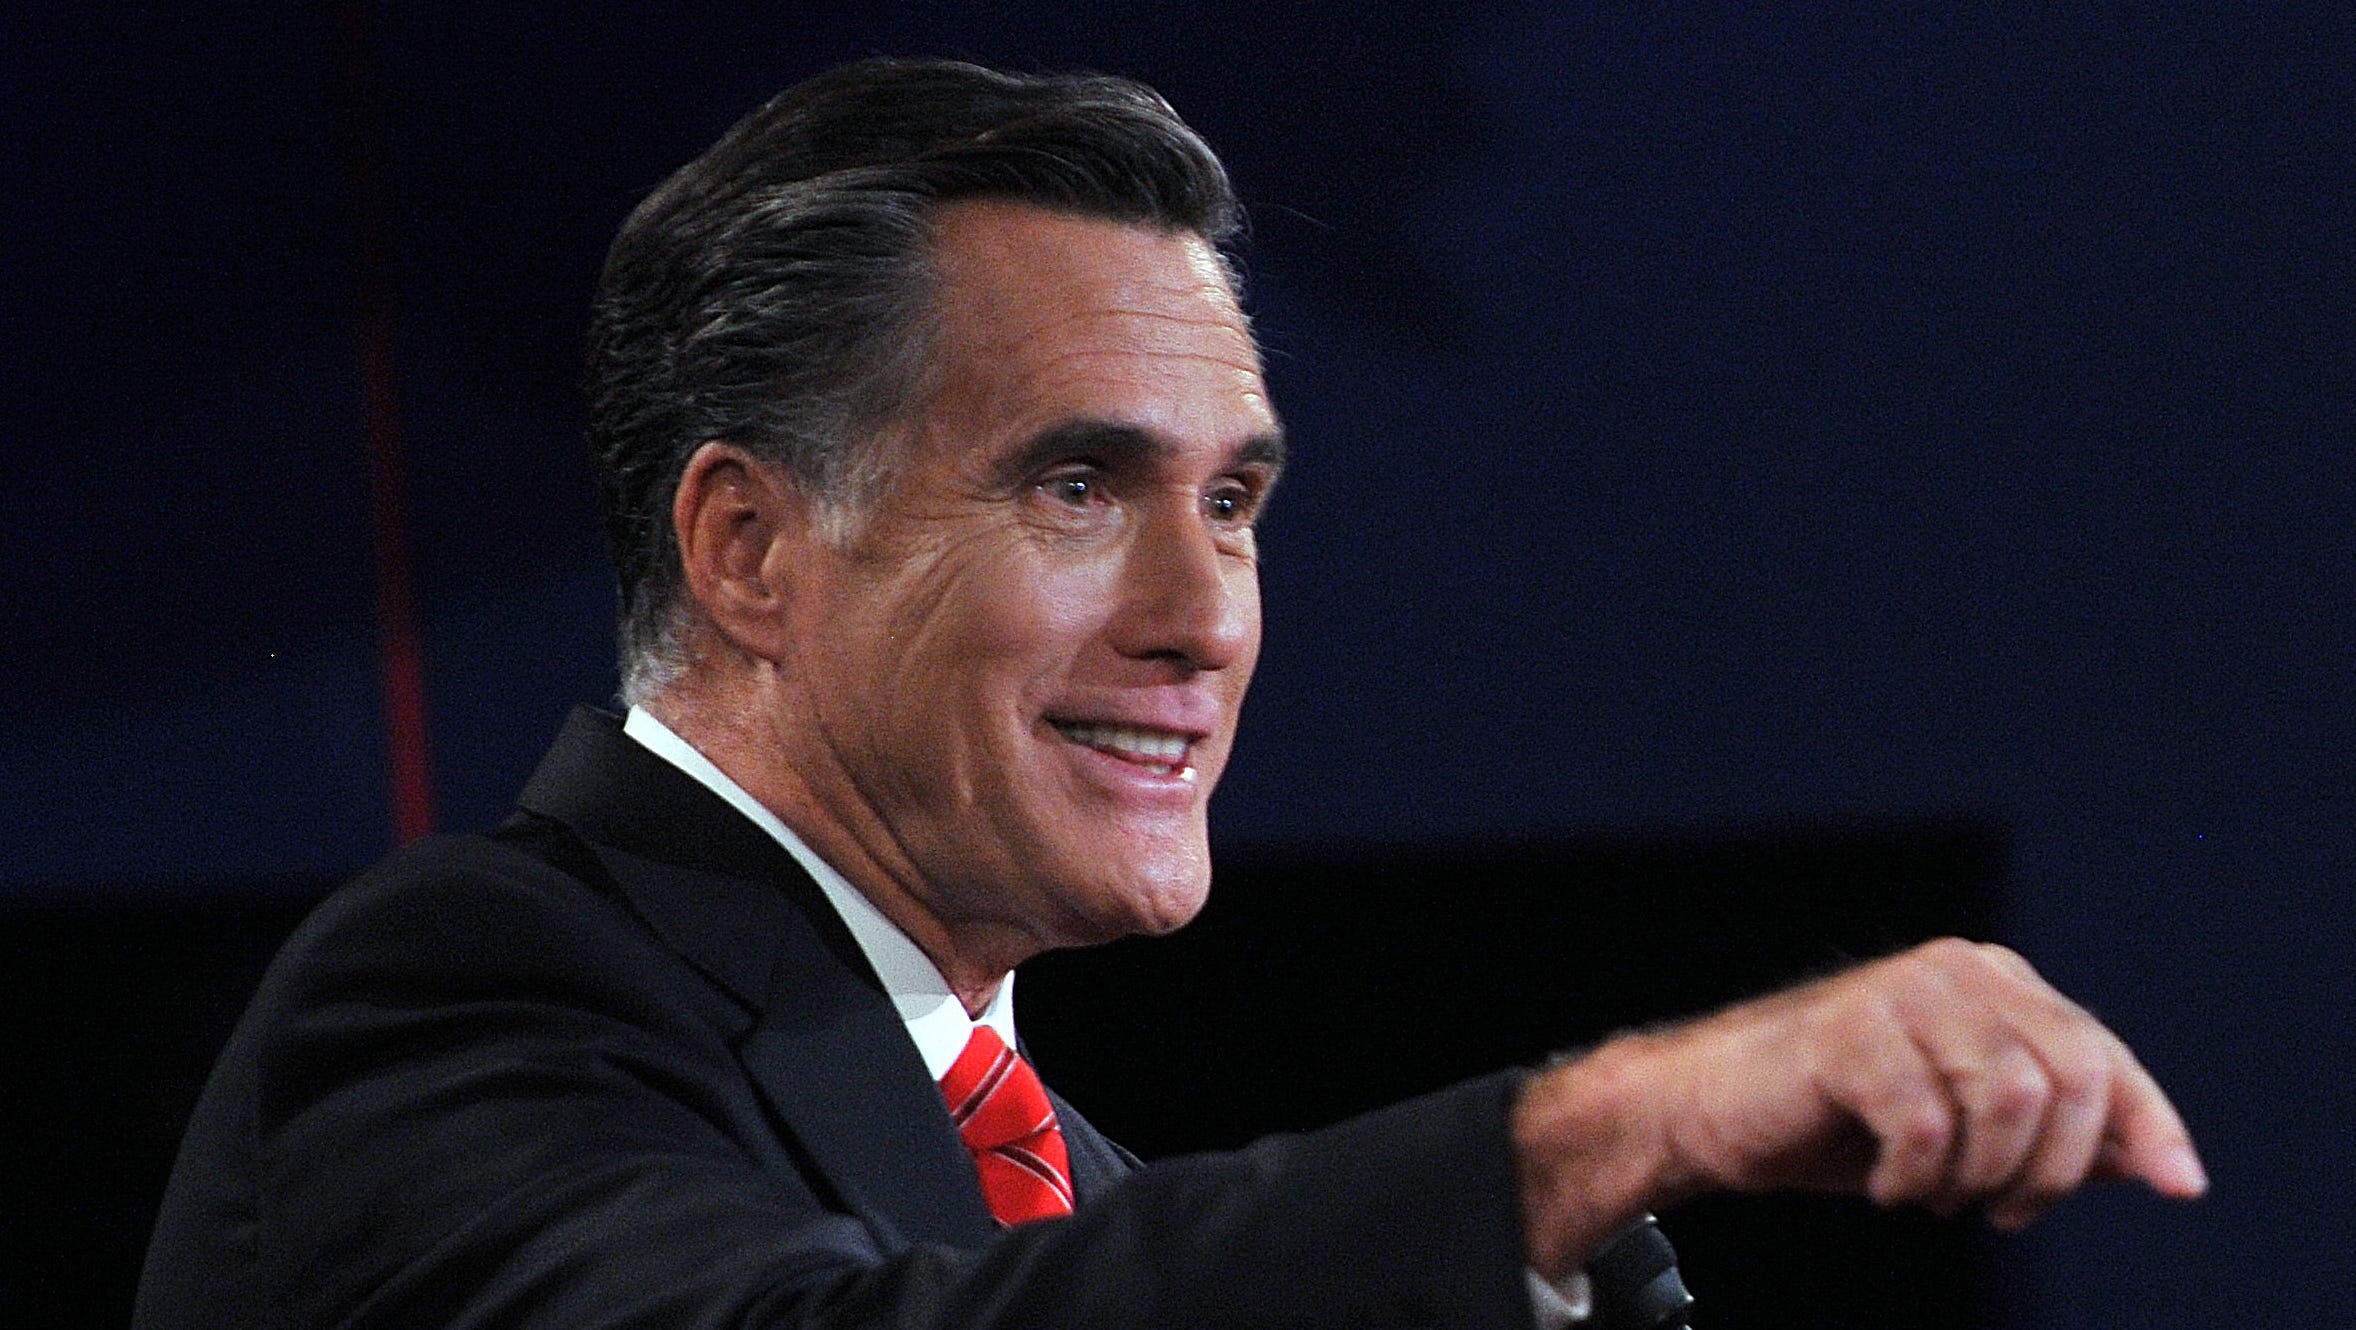 Romney Praised For First Debate Against Obama